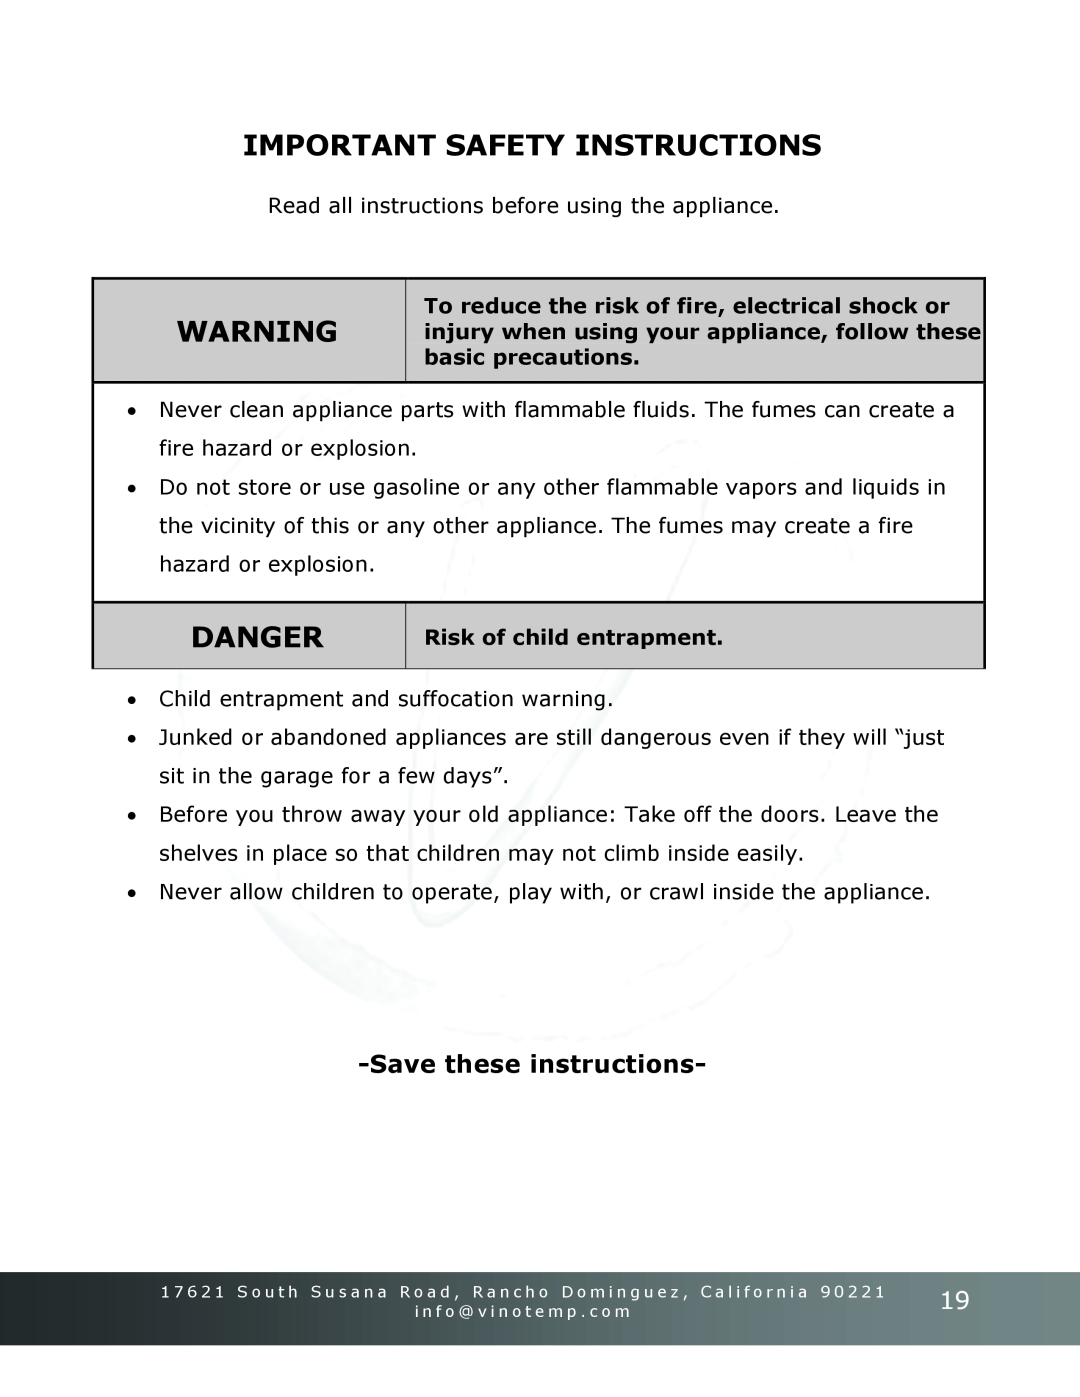 Vinotemp Portofino owner manual Important Safety Instructions, Danger, Savethese instructions 